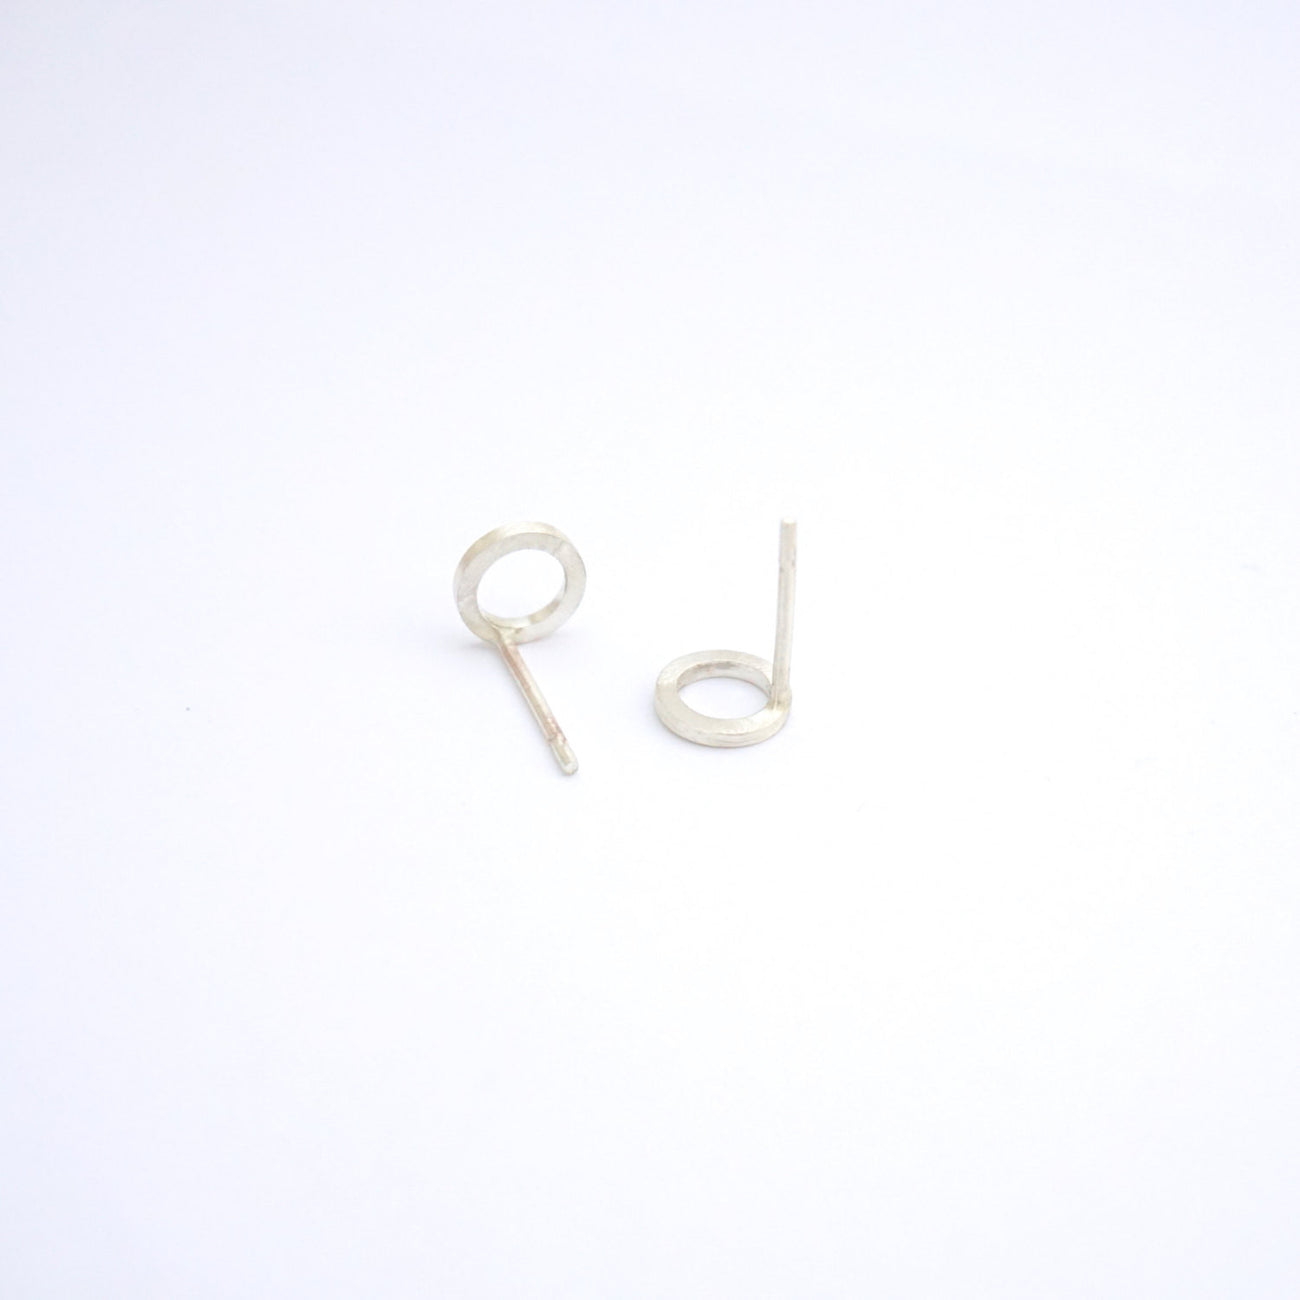 Sophisticated Hand-Made Open Circle Stud Earrings - 0183 - Virginia Wynne Designs